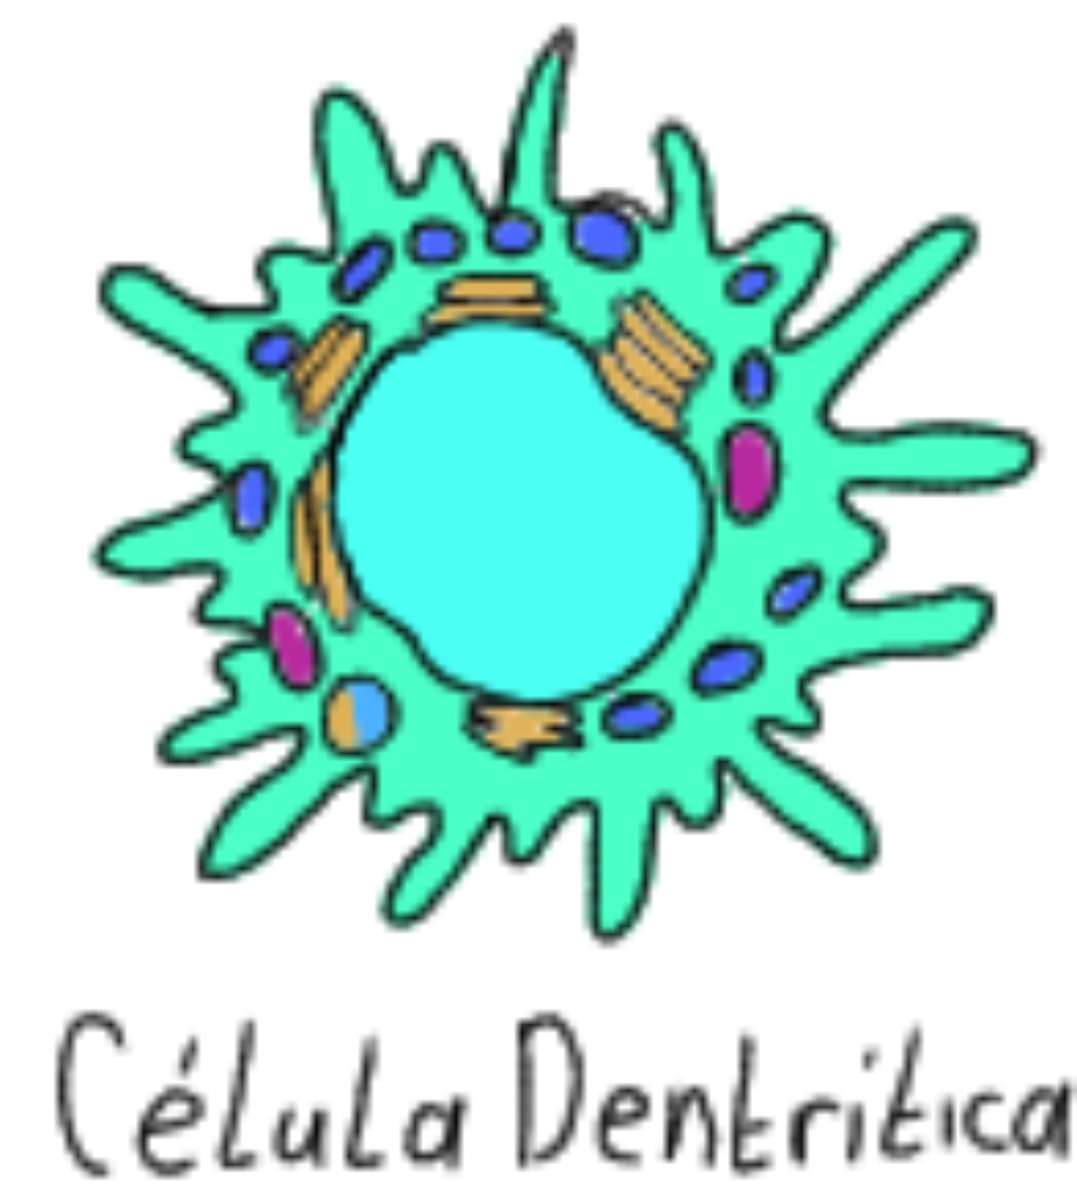 cellula dendritica puzzle online